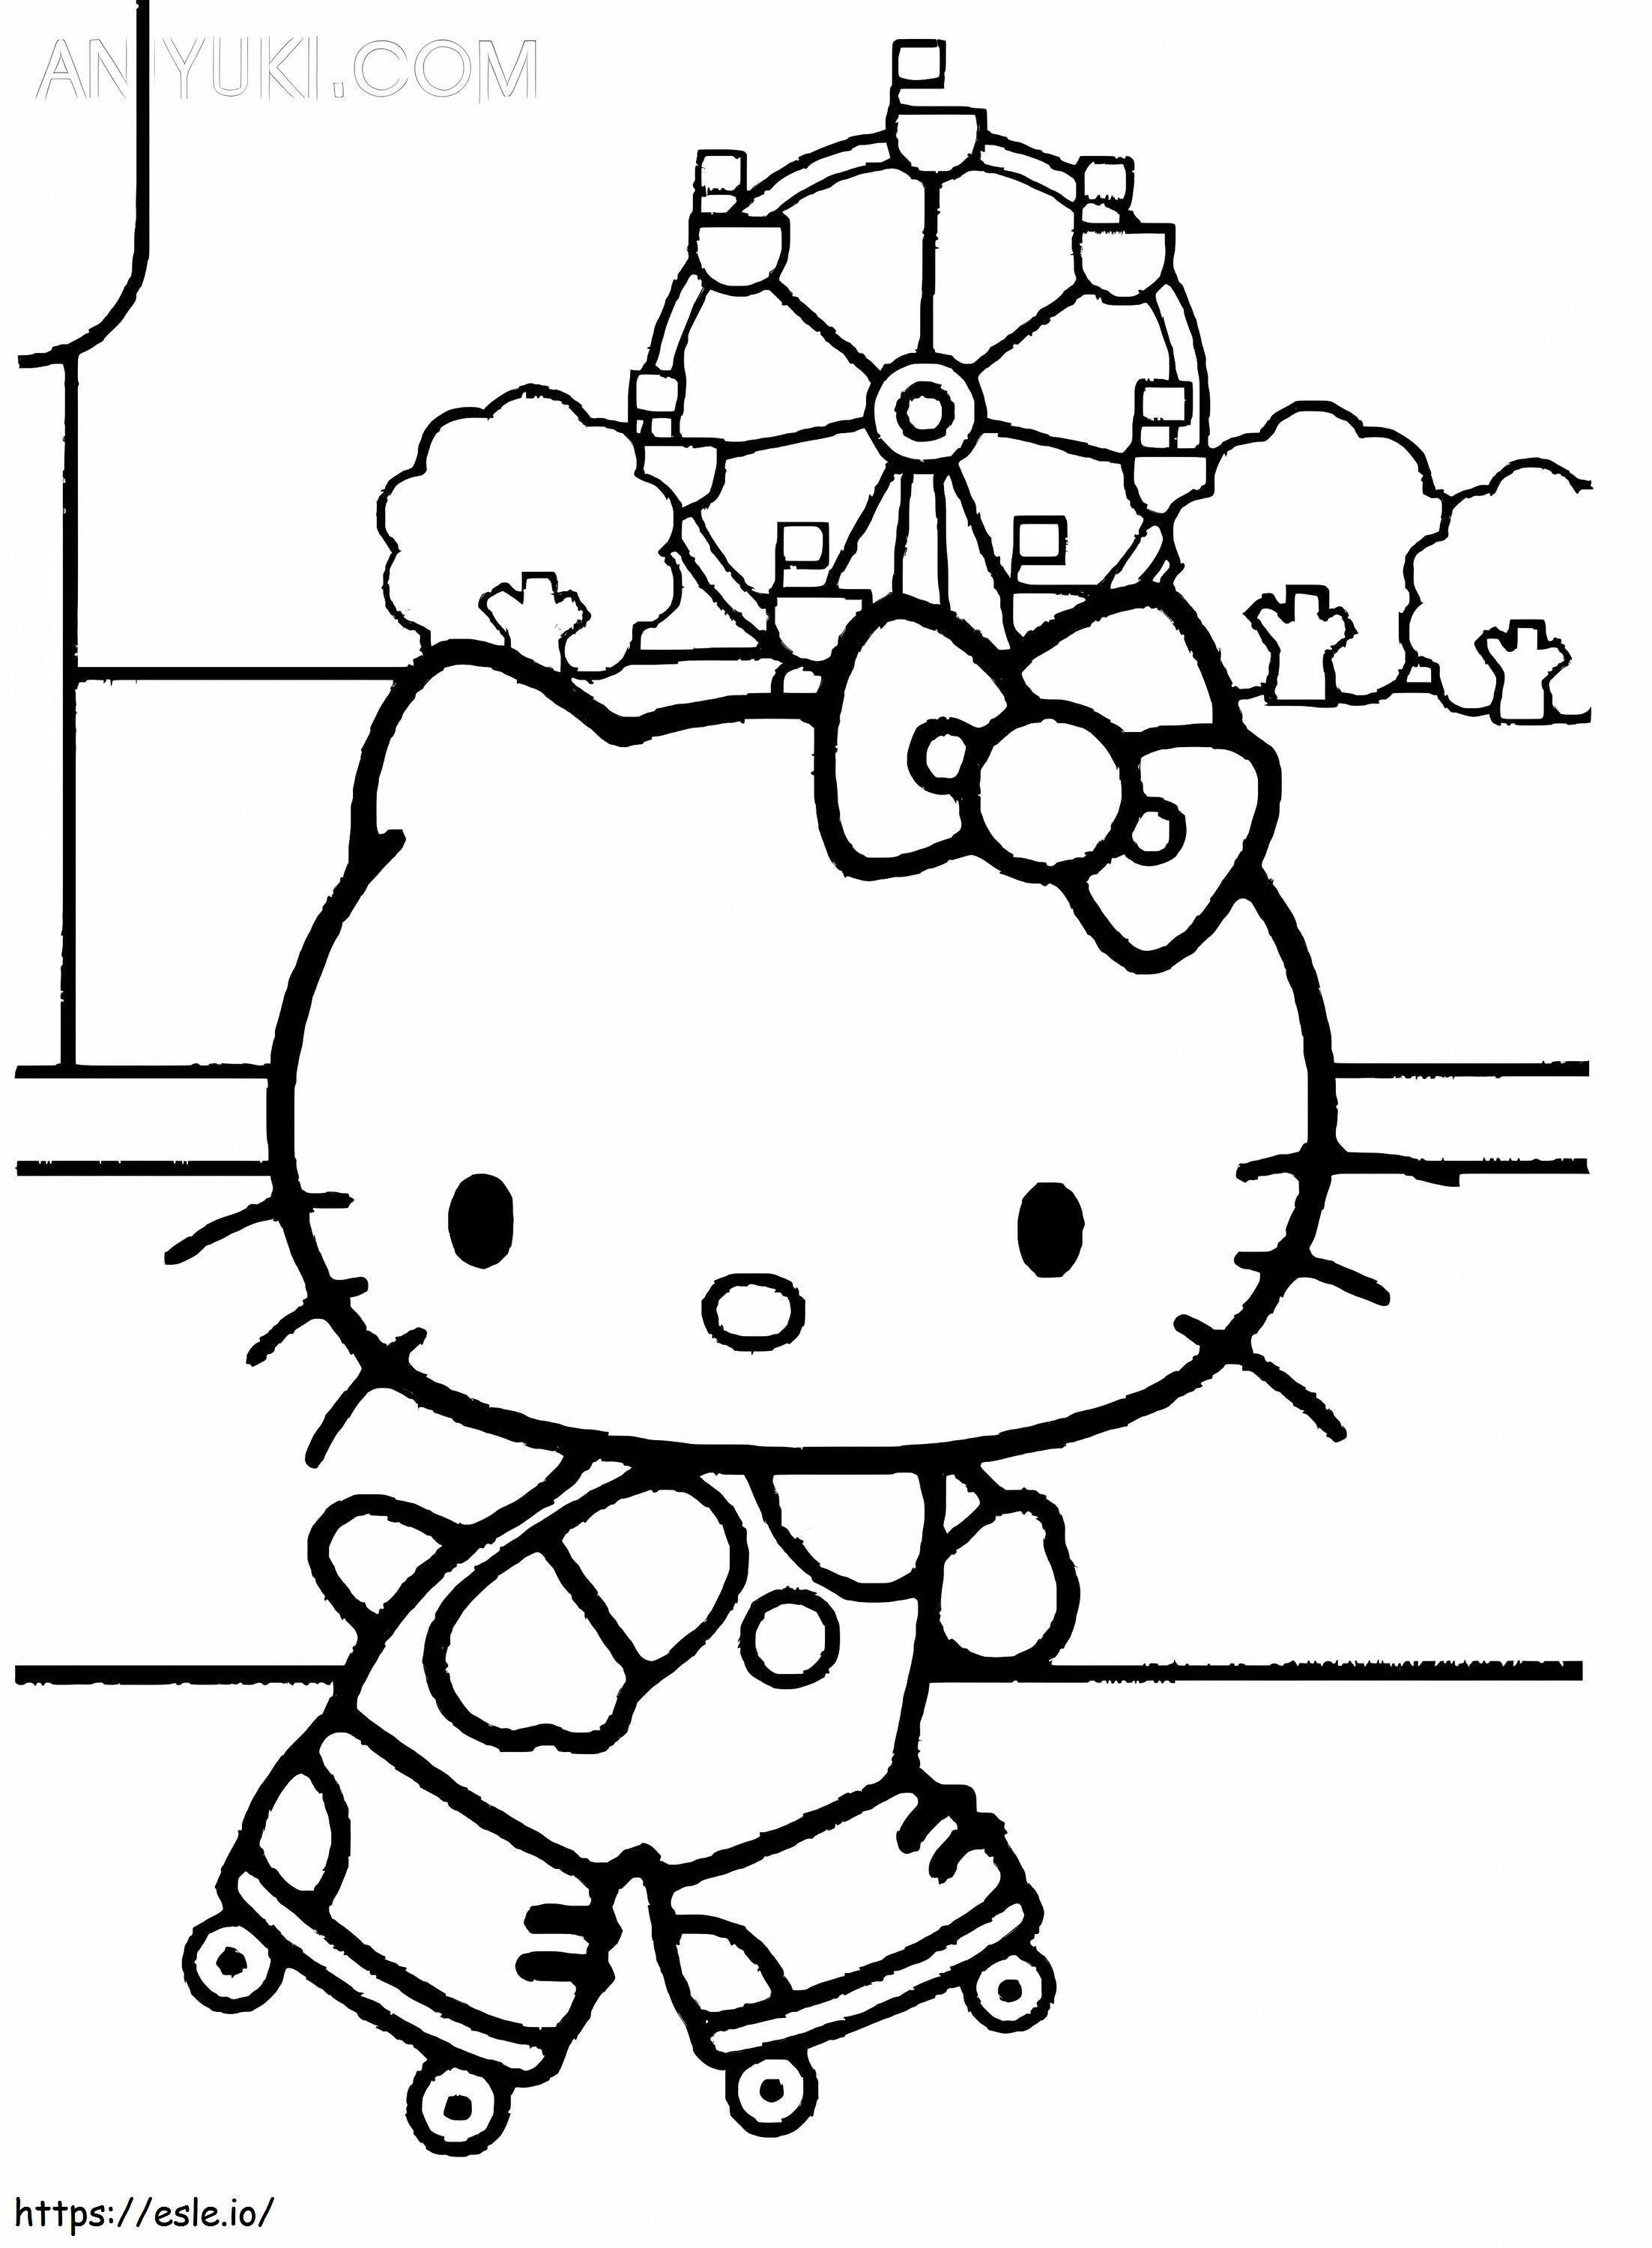 Hello Kitty na rolkach kolorowanka